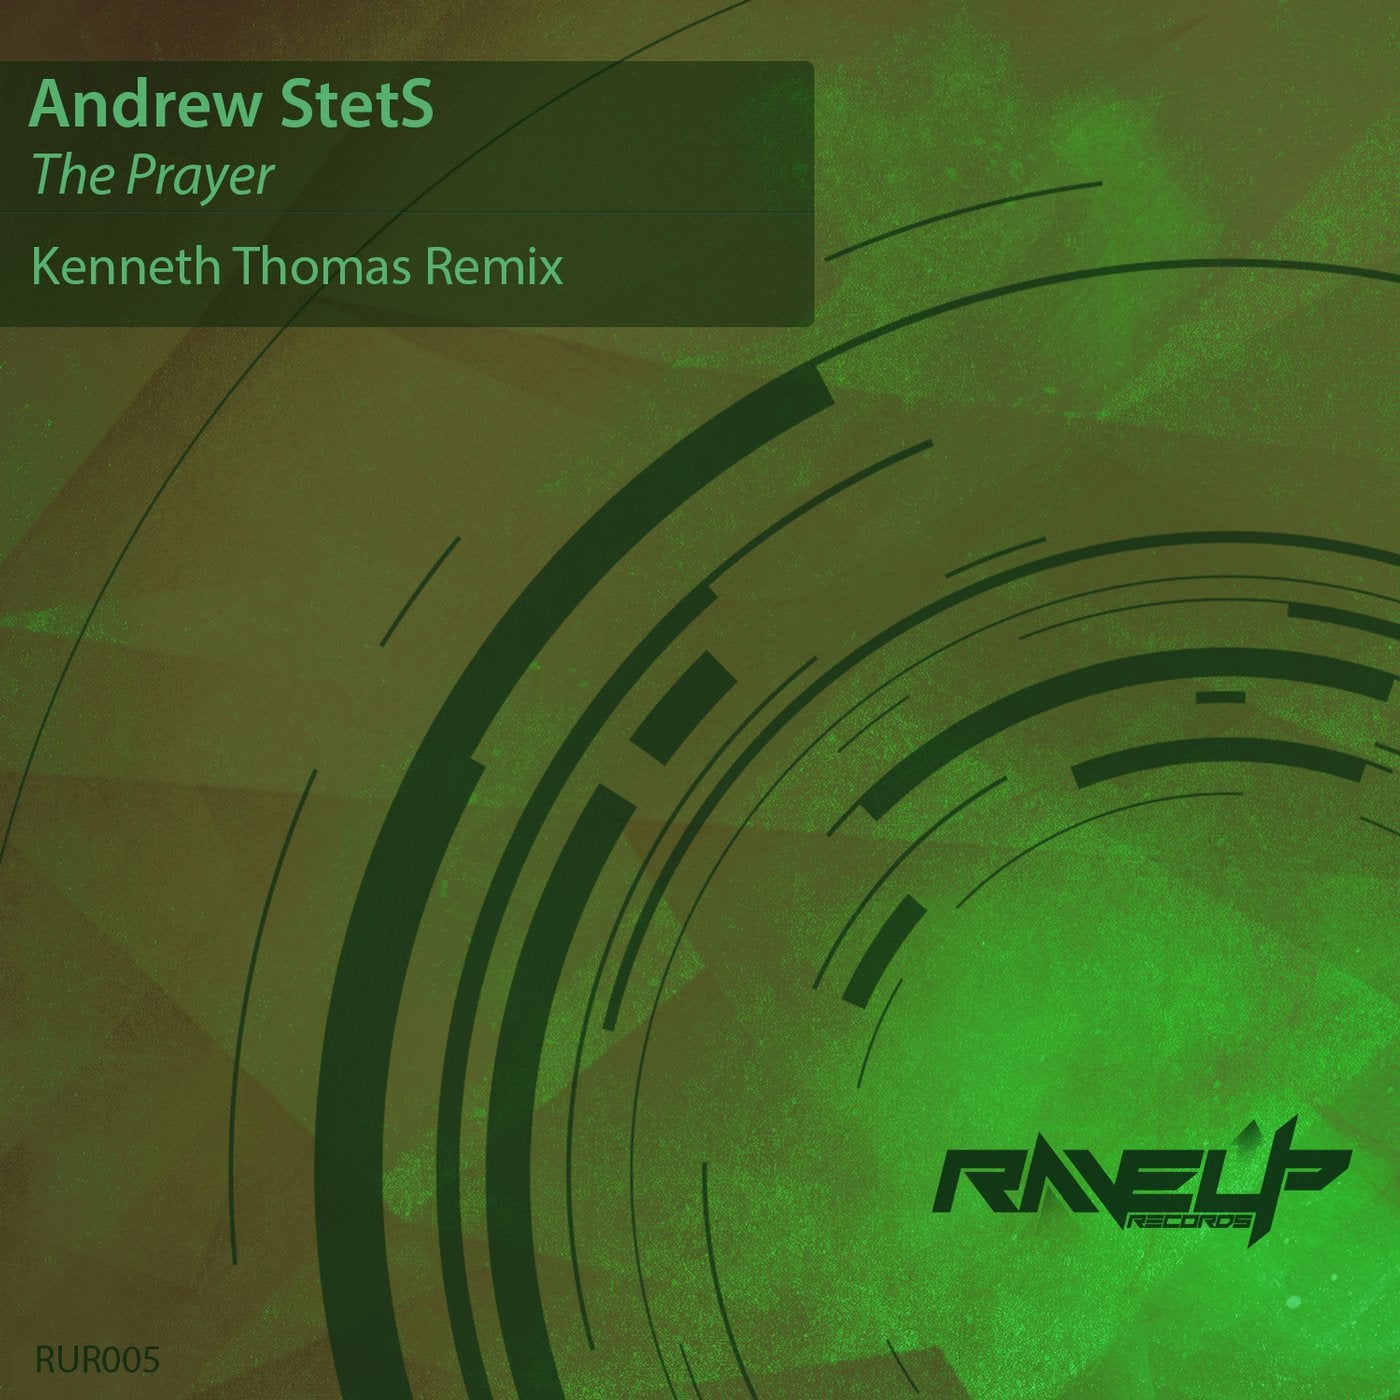 The Prayer (Kenneth Thomas Remix)